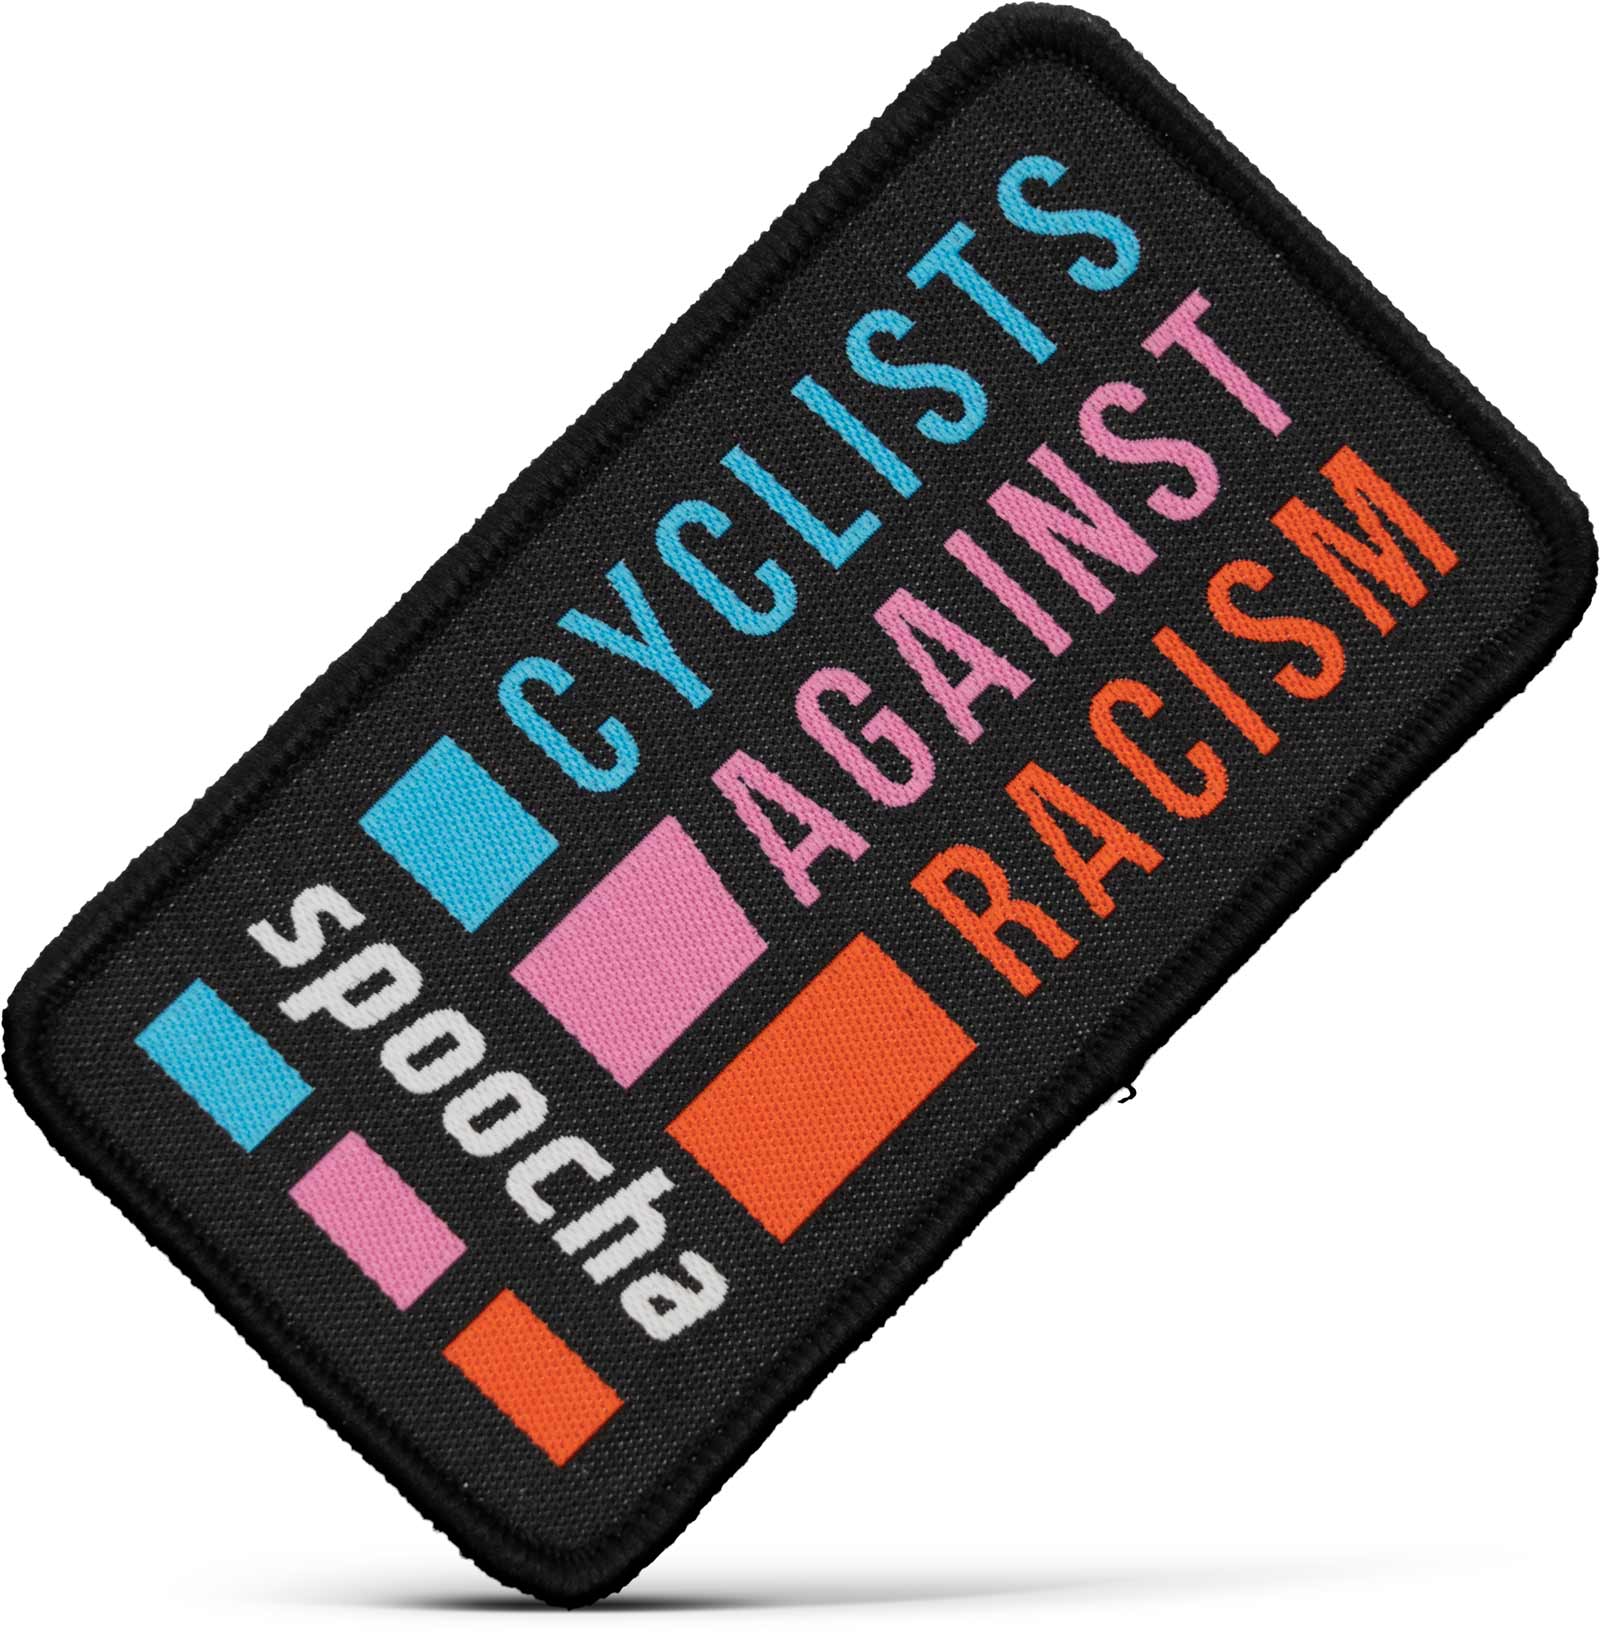 patch_against_racism_neu